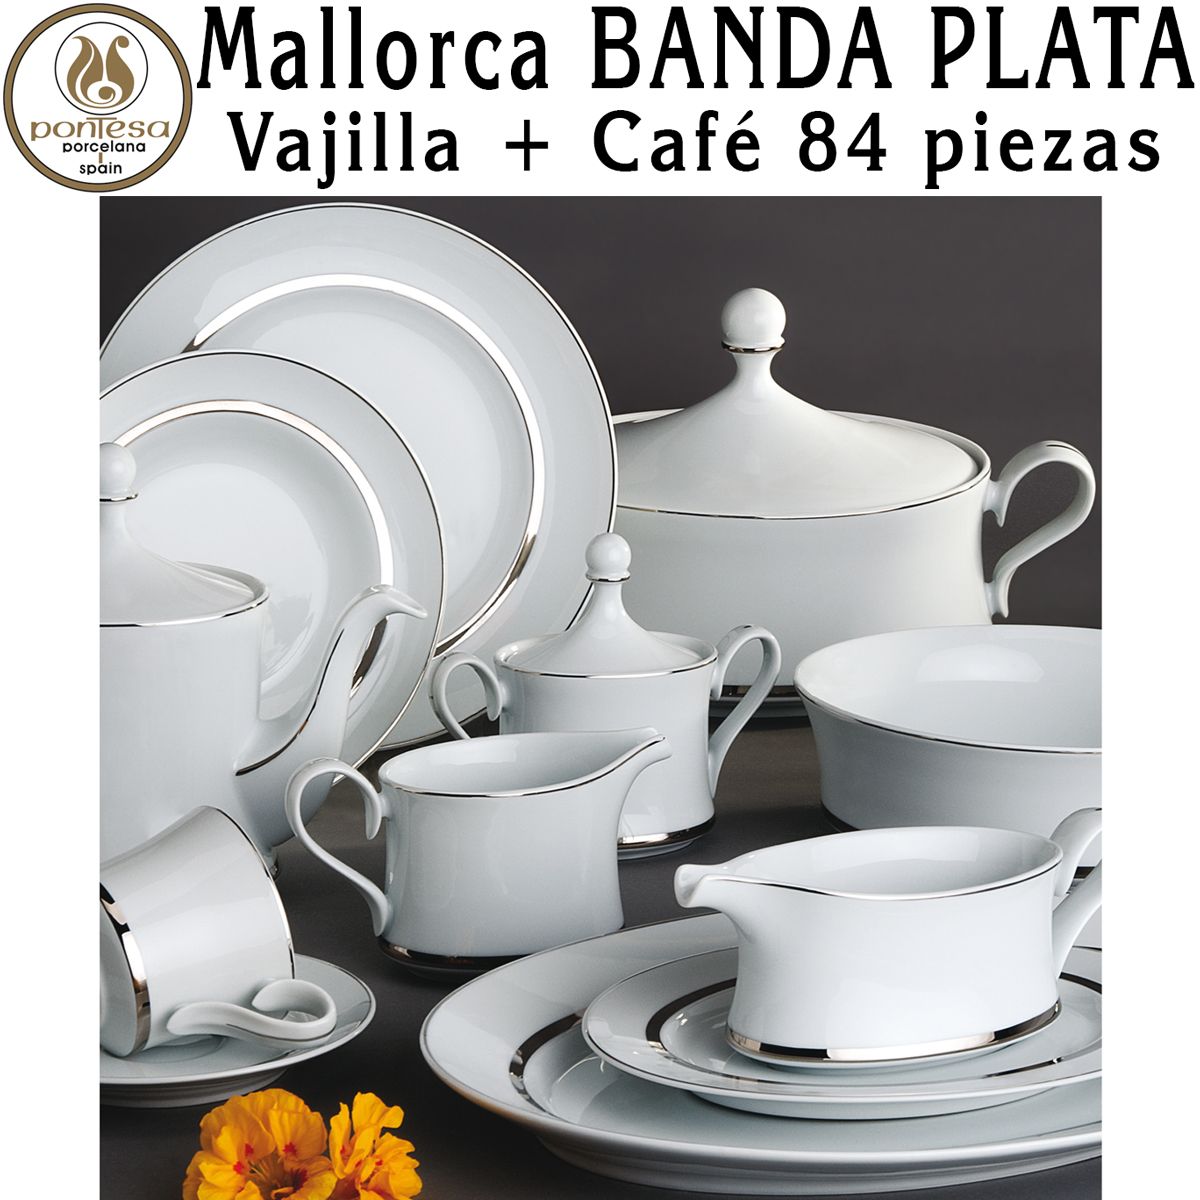 Vajilla con juego de Café 84 piezas 12 servicios completos Santa Clara  Mallorca Banda Plata